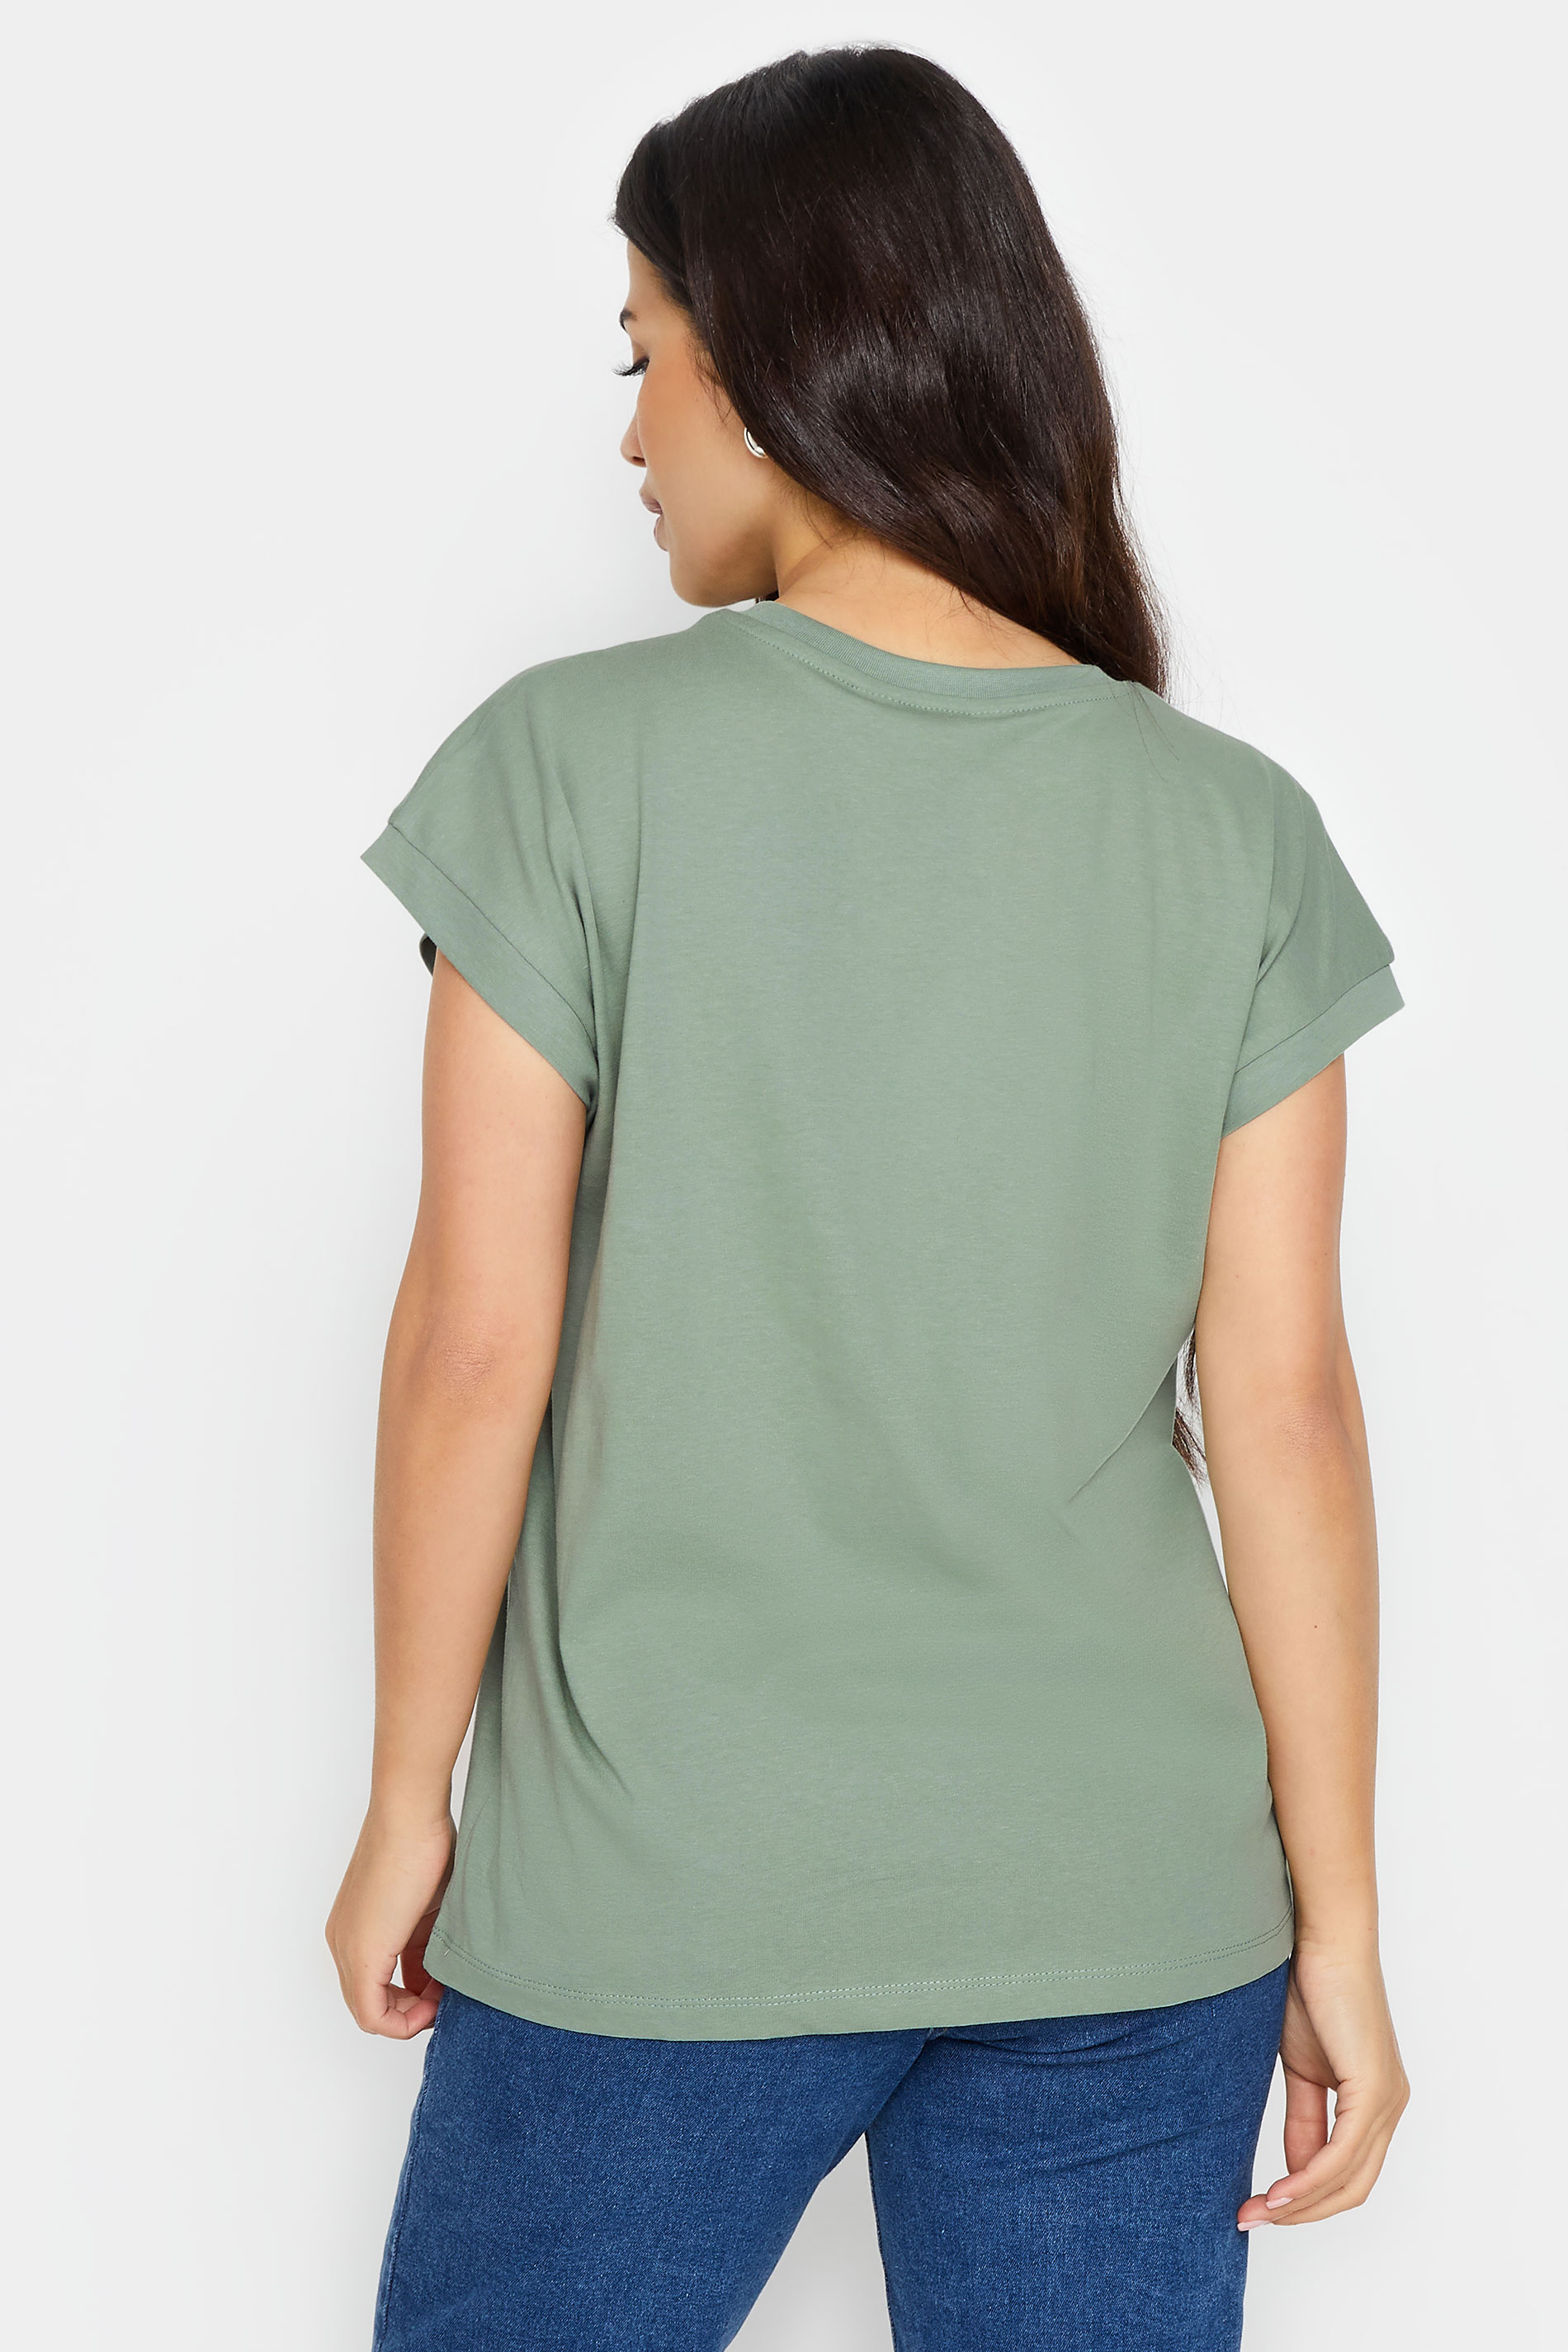 PixieGirl Petite Women's Sage Green Short Sleeve T-Shirt | PixieGirl 3